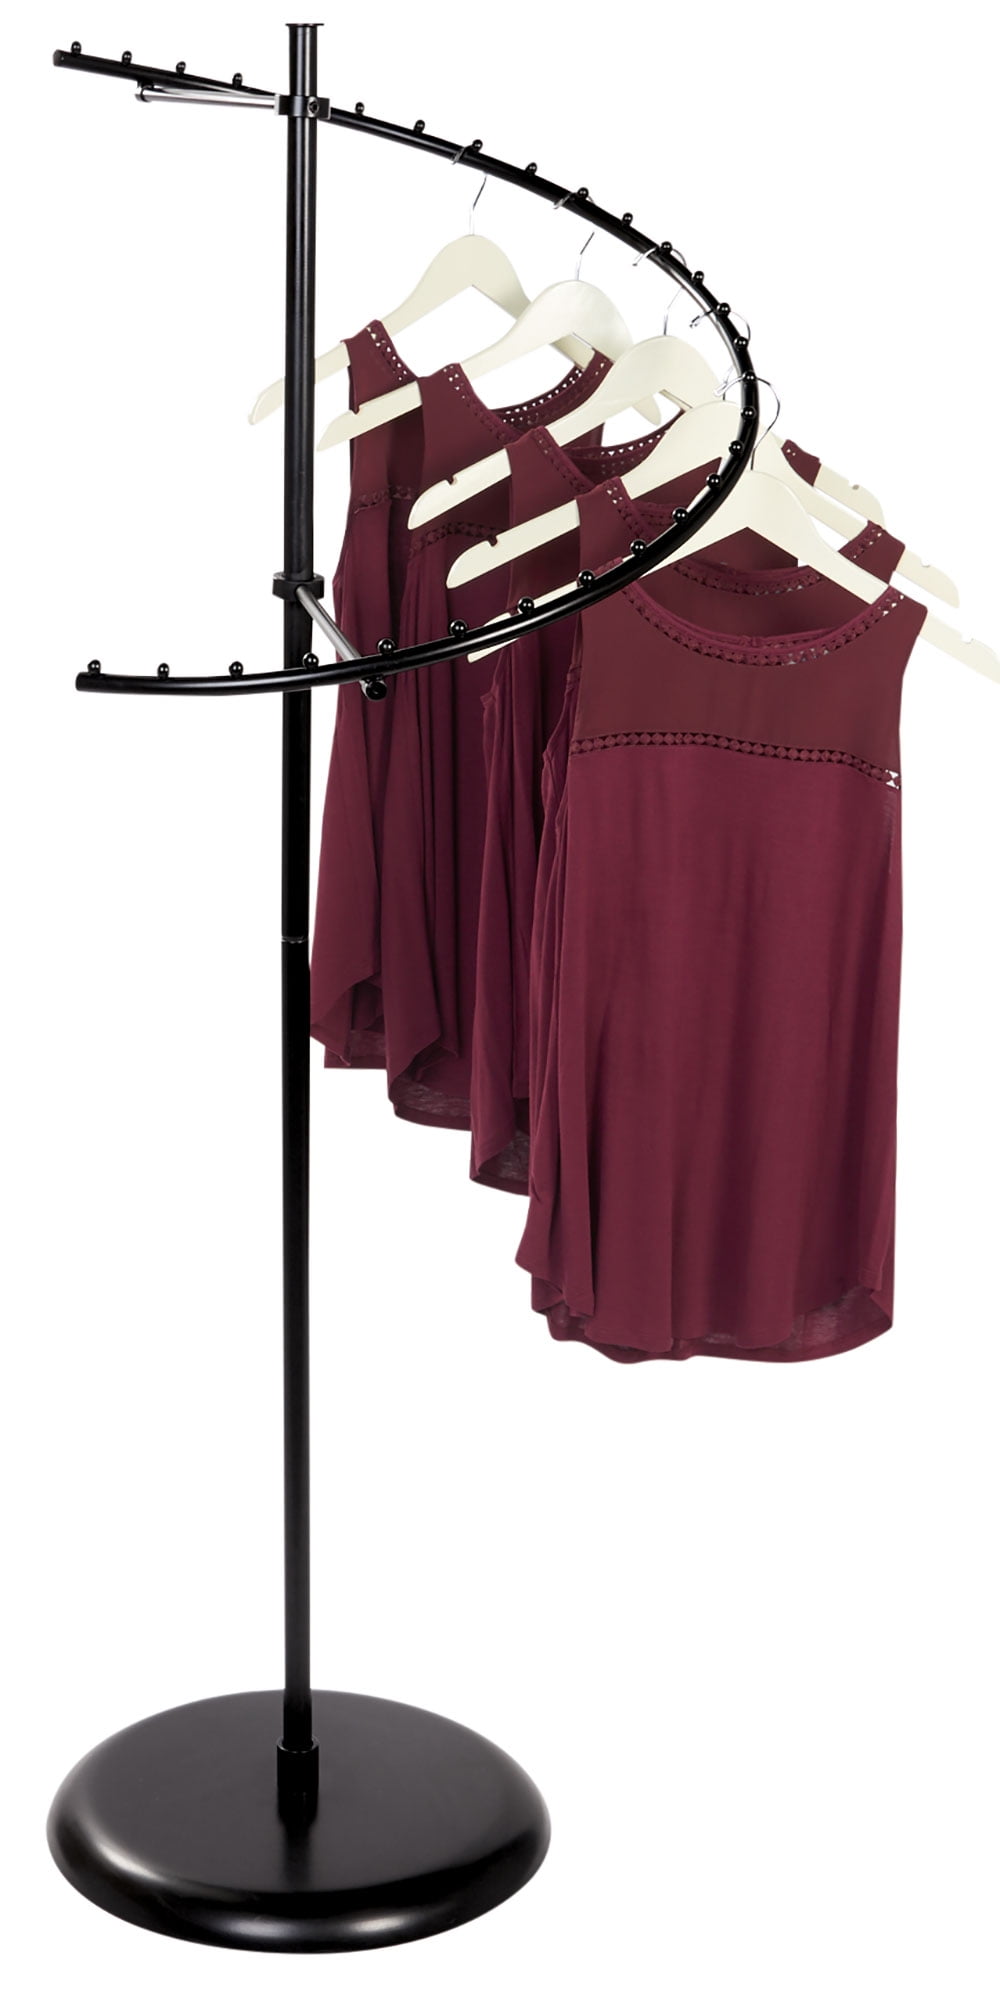 Spiral Clothing Rack 29 Ball Garment Retail Display Store Fixture Chrome 63" H 